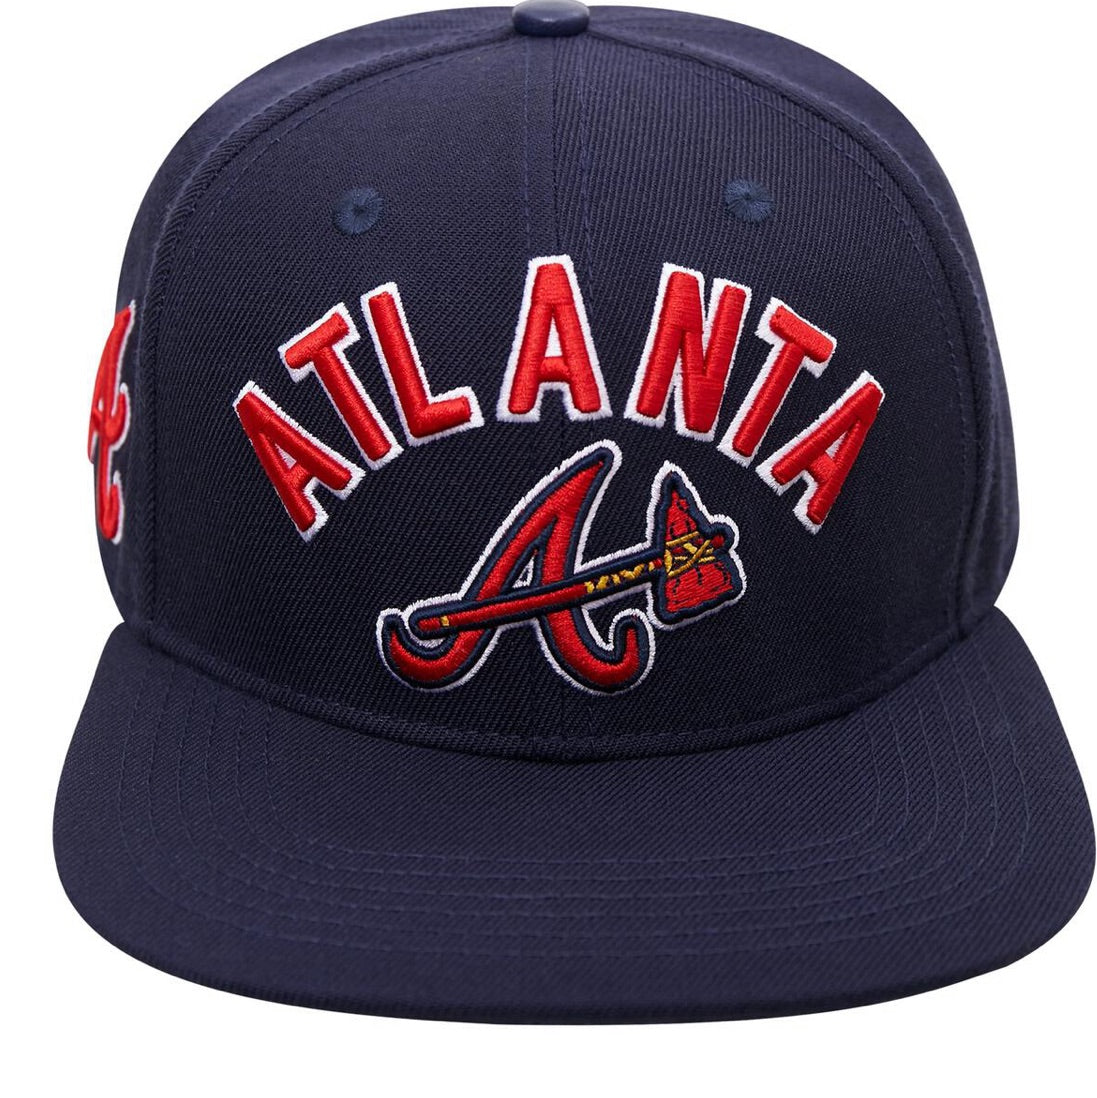 Pro Standard Atlanta Braves SnapBack Hat